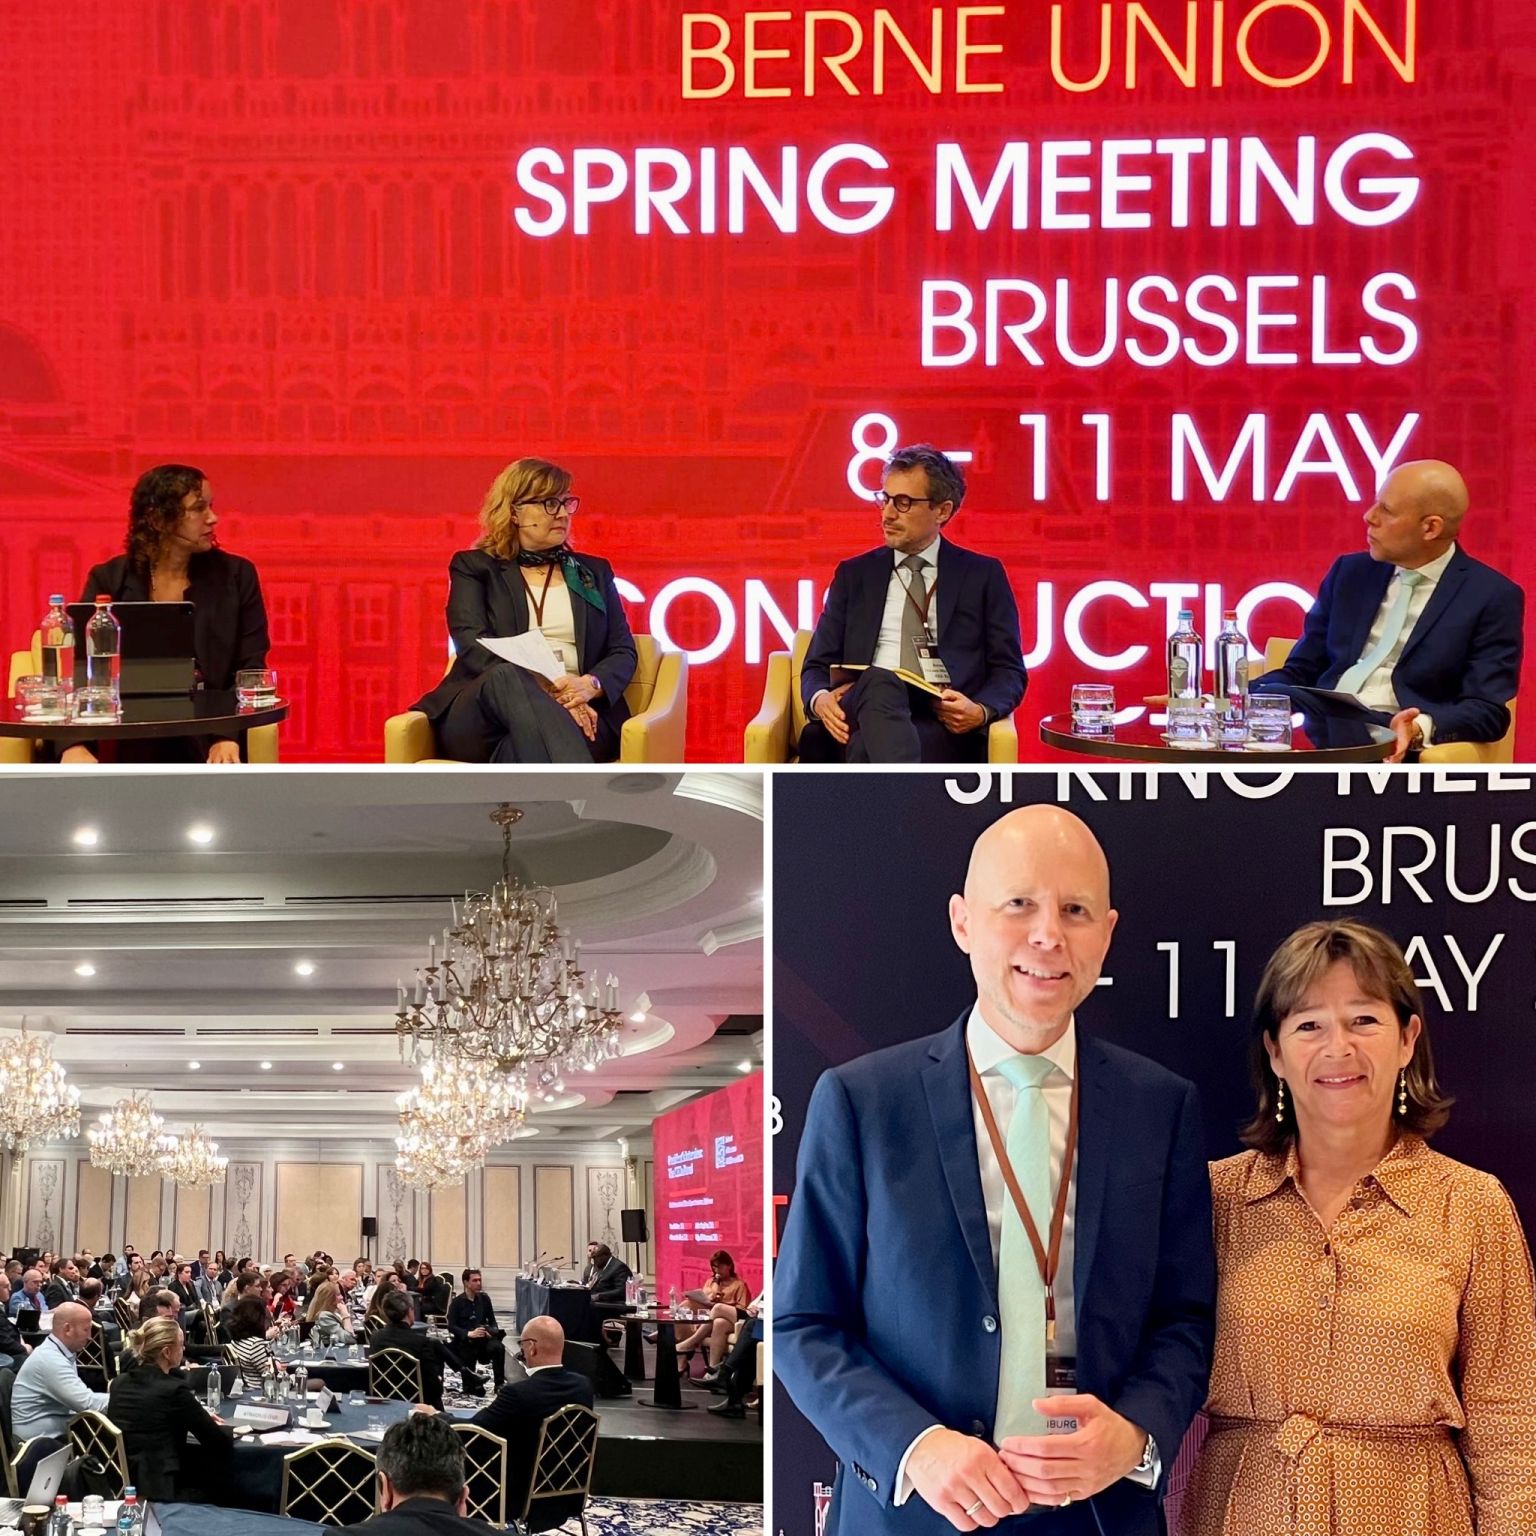 Berne Union Spring Meeting in Brussels